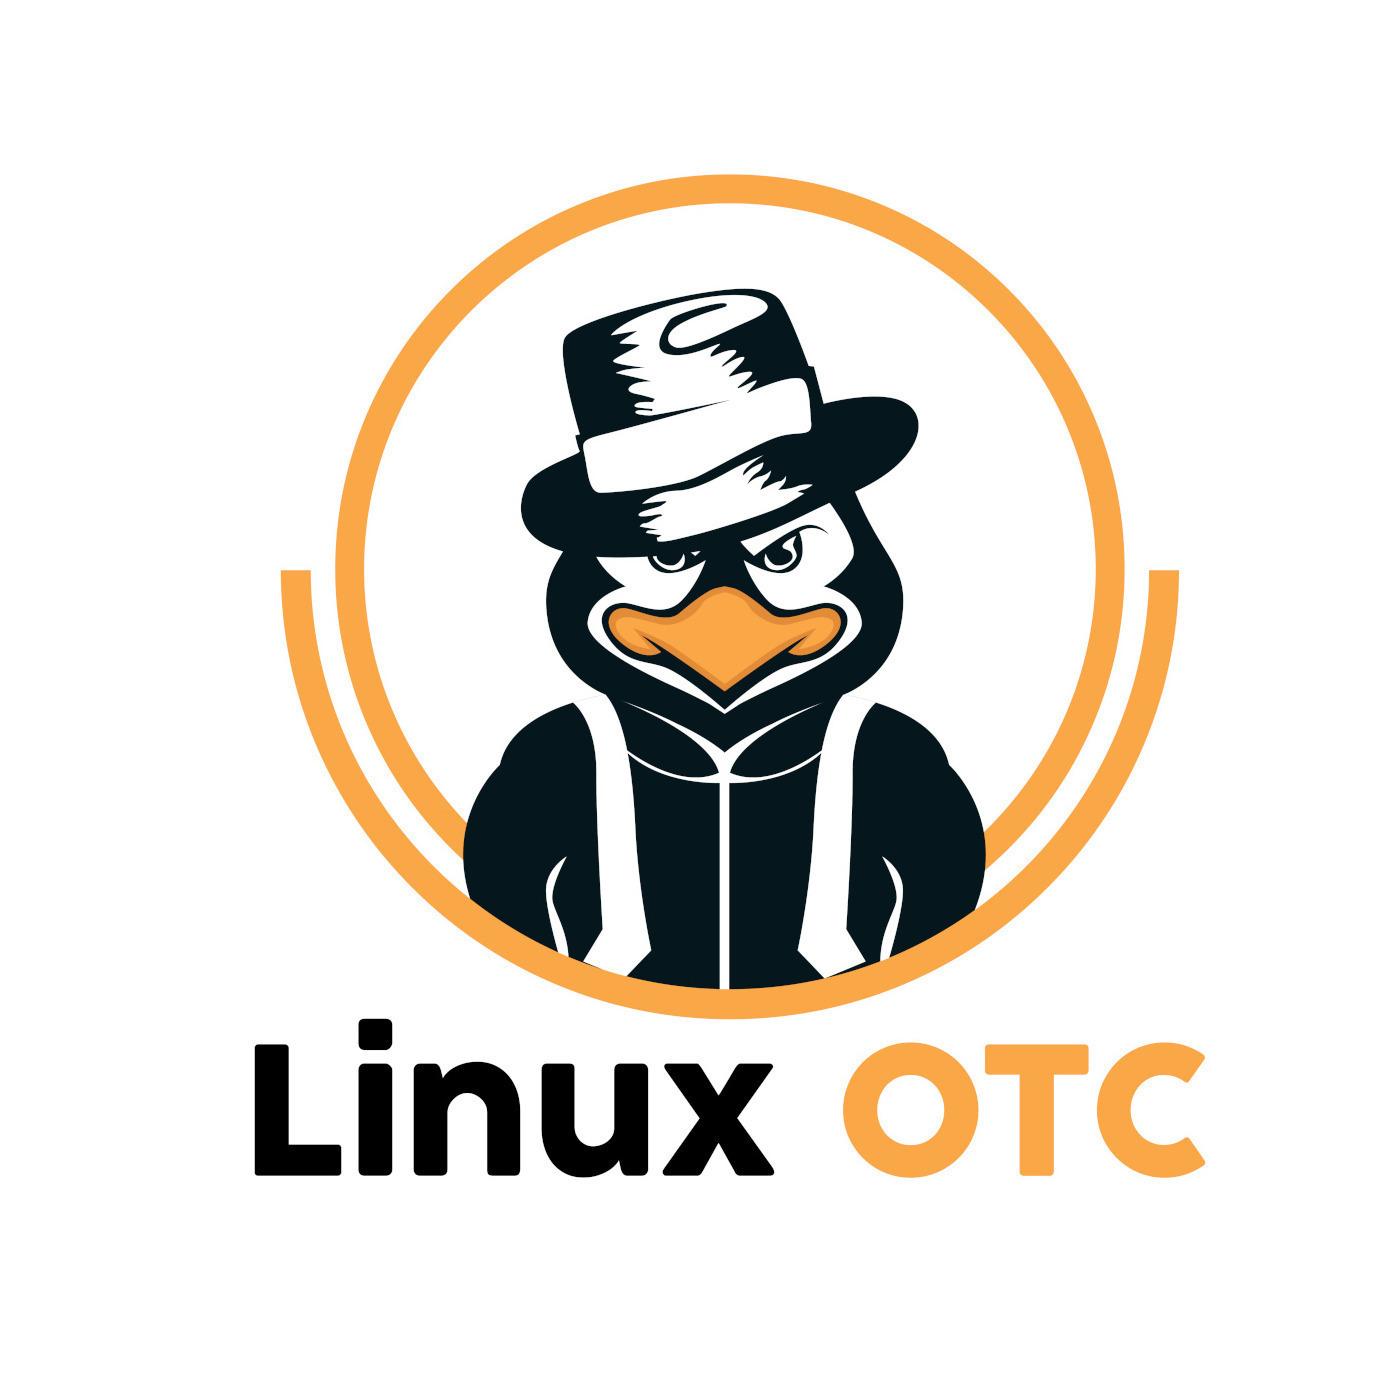 Linux OTC